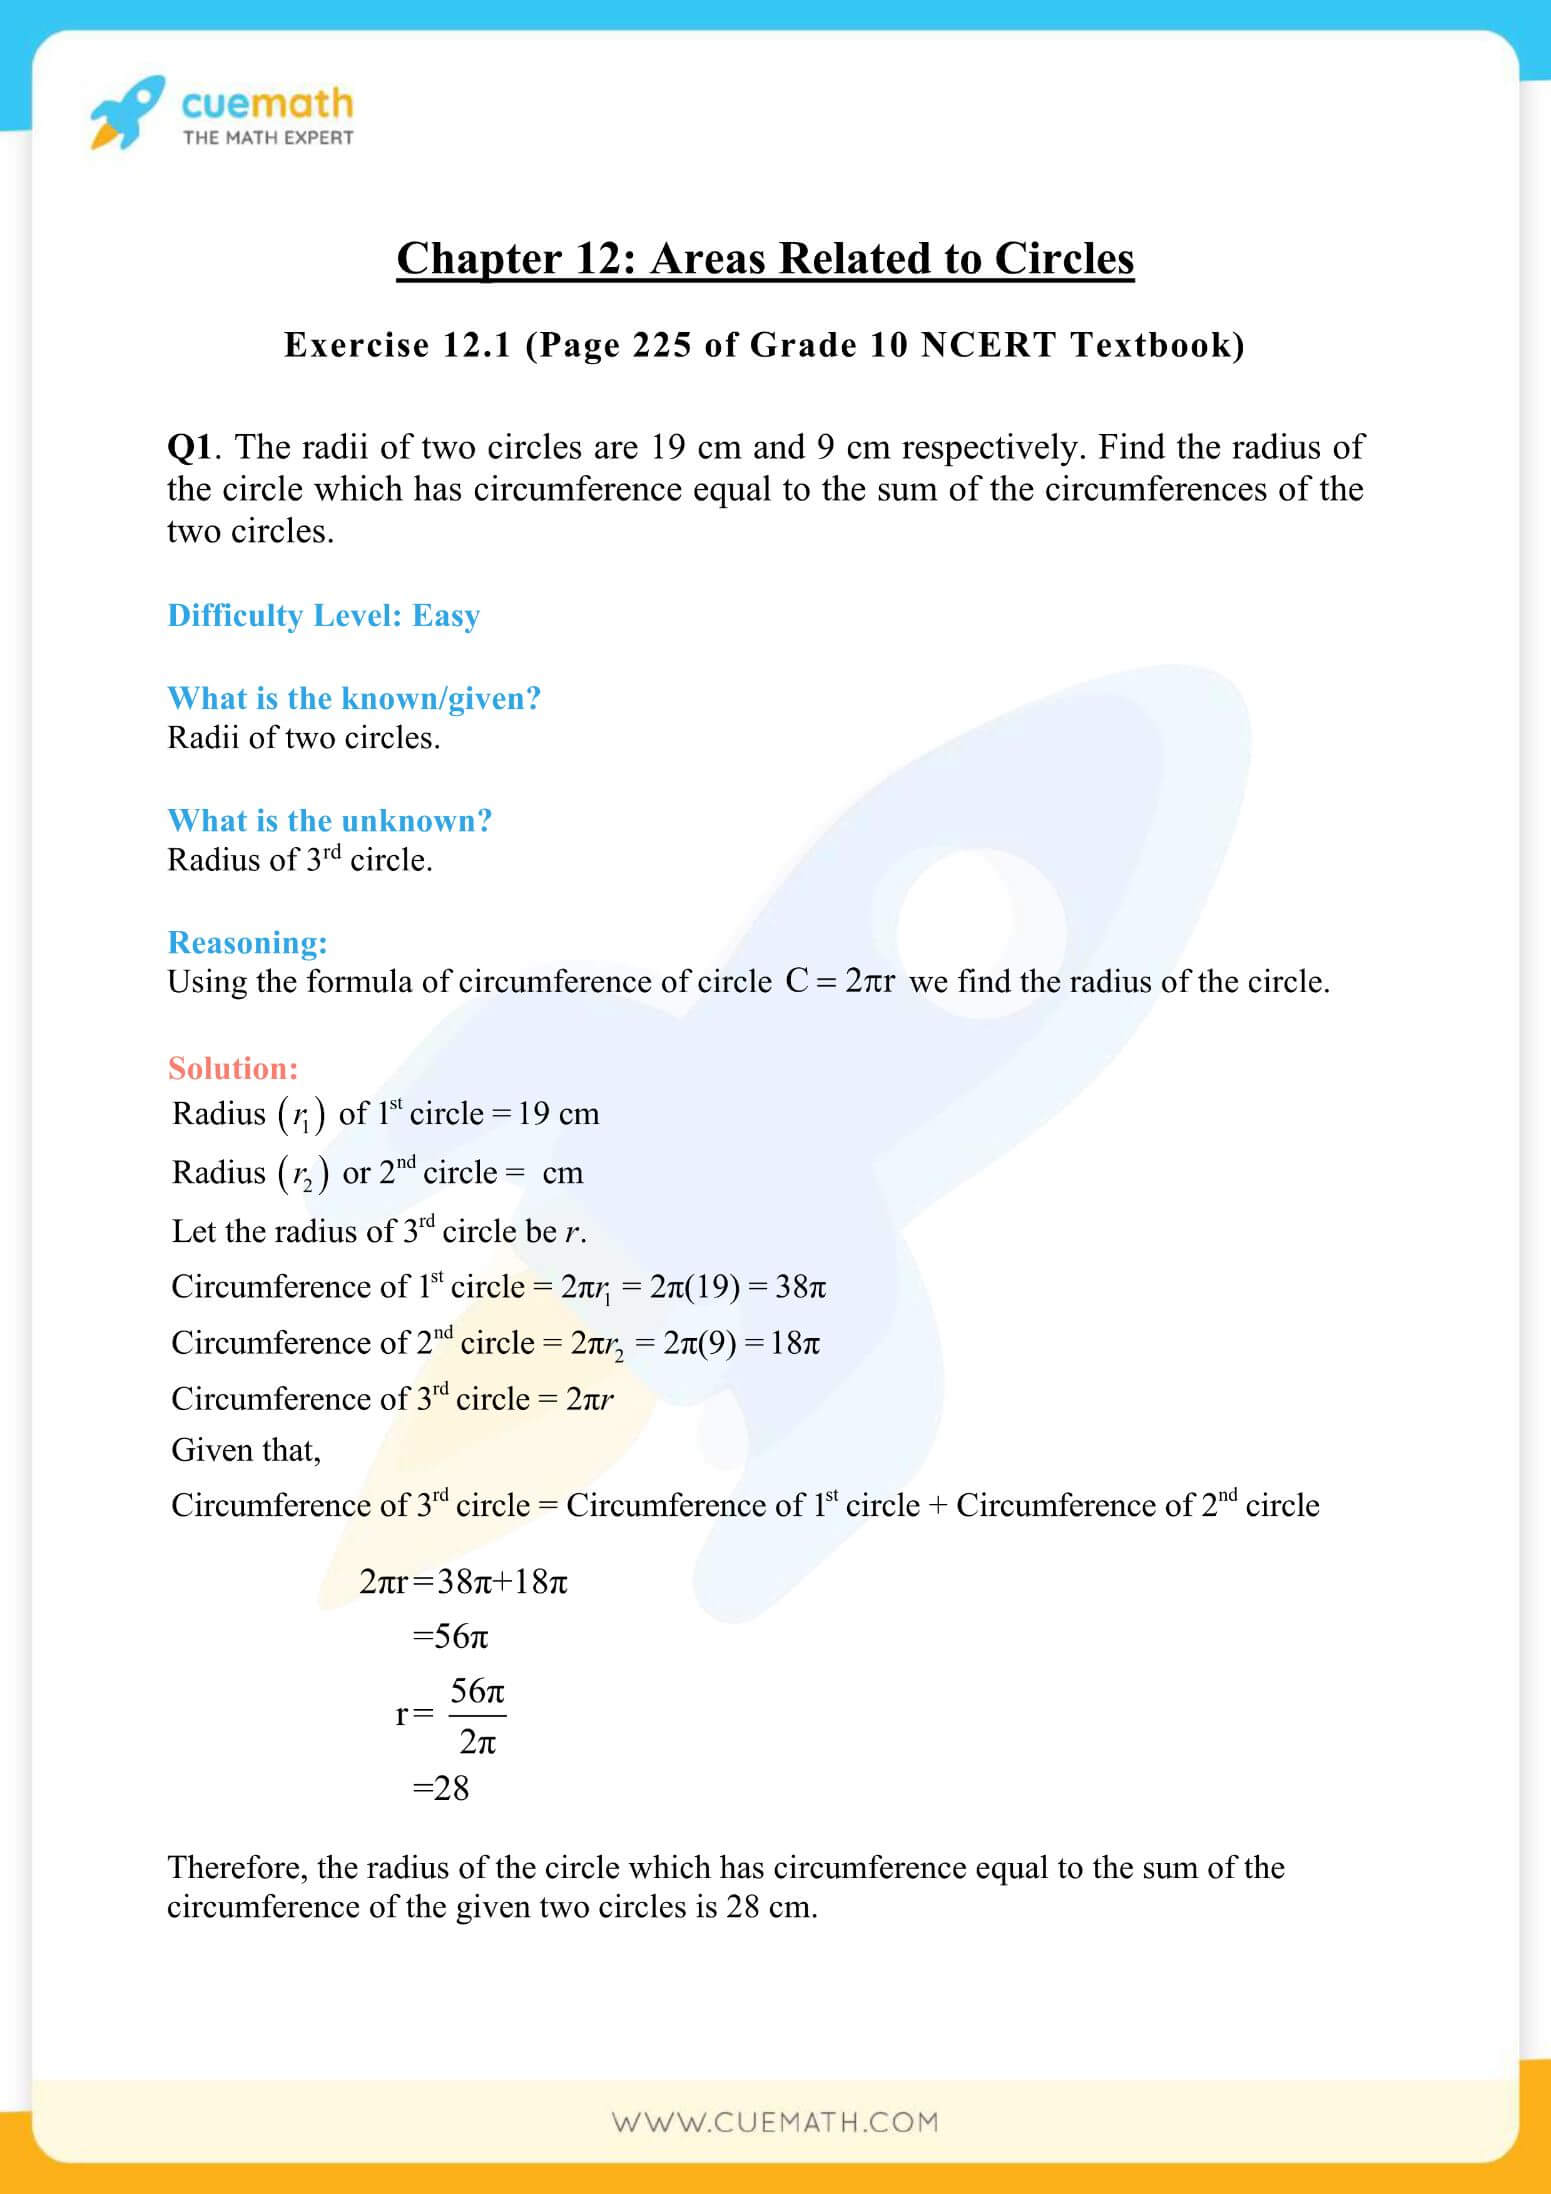 NCERT Solutions Class 10 Maths Chapter 12 Exercise 12.1 1